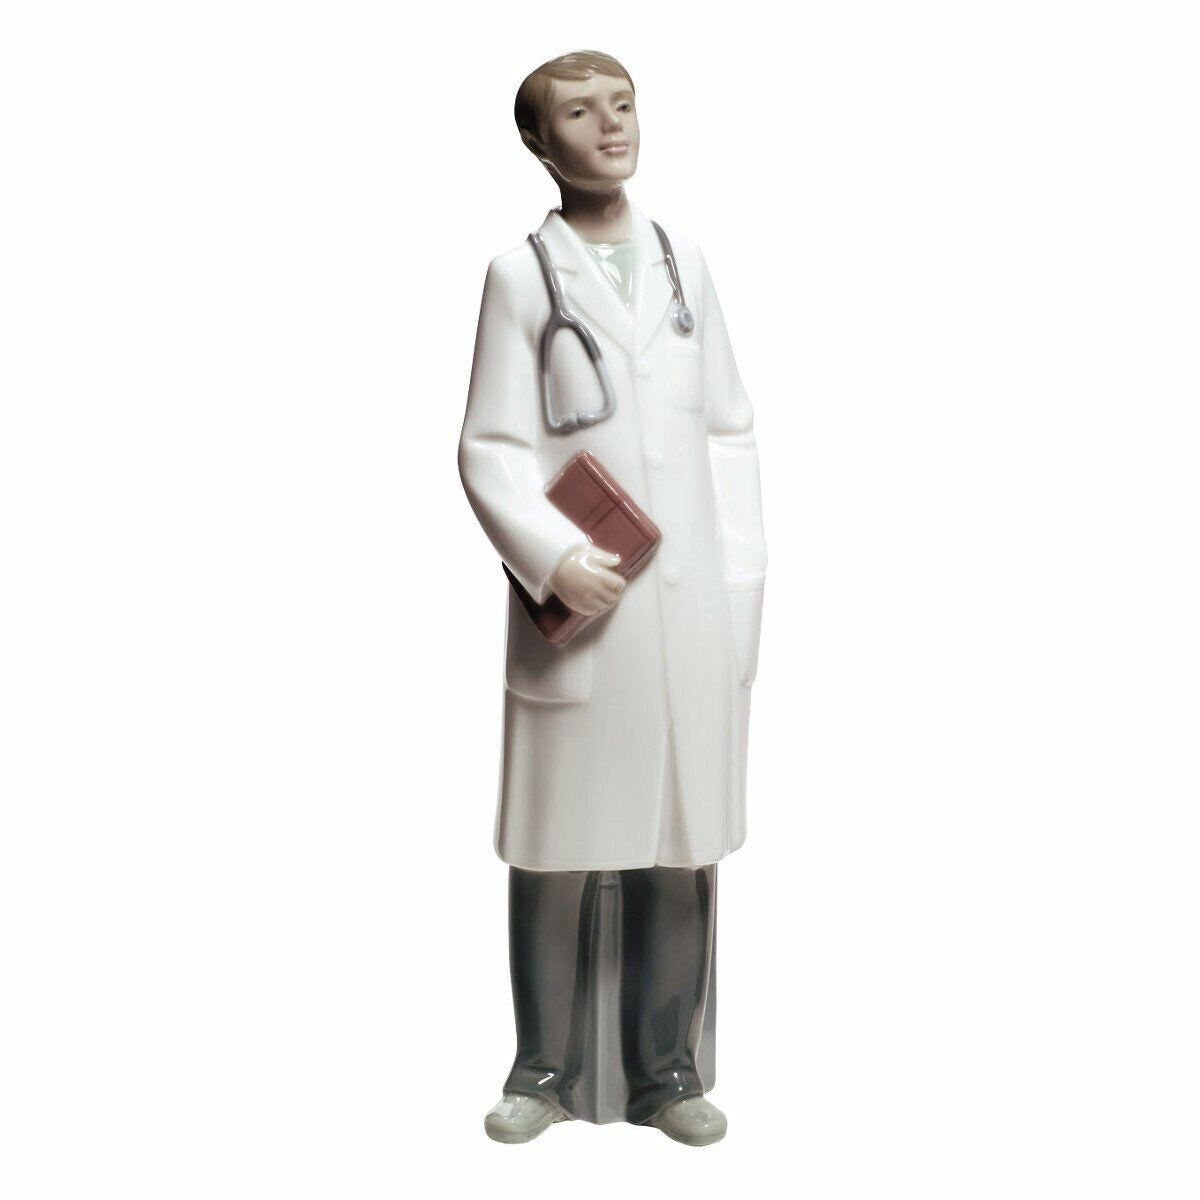 Doctor Figurine by NAO- Male